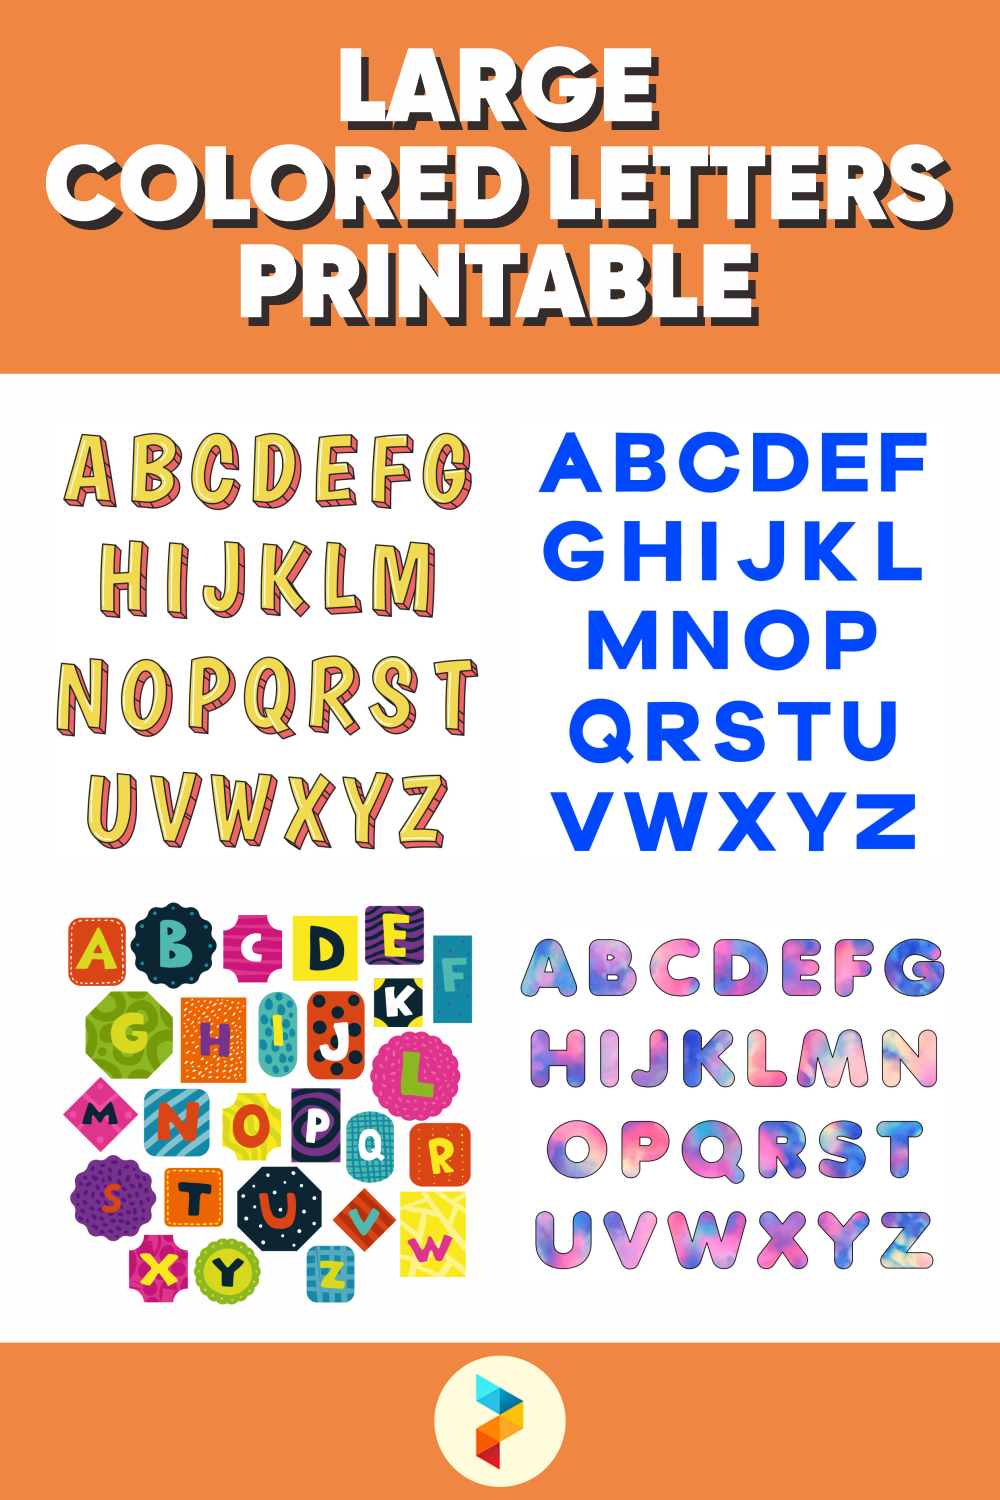 10 Best Large Colored Letters Printable Printablee